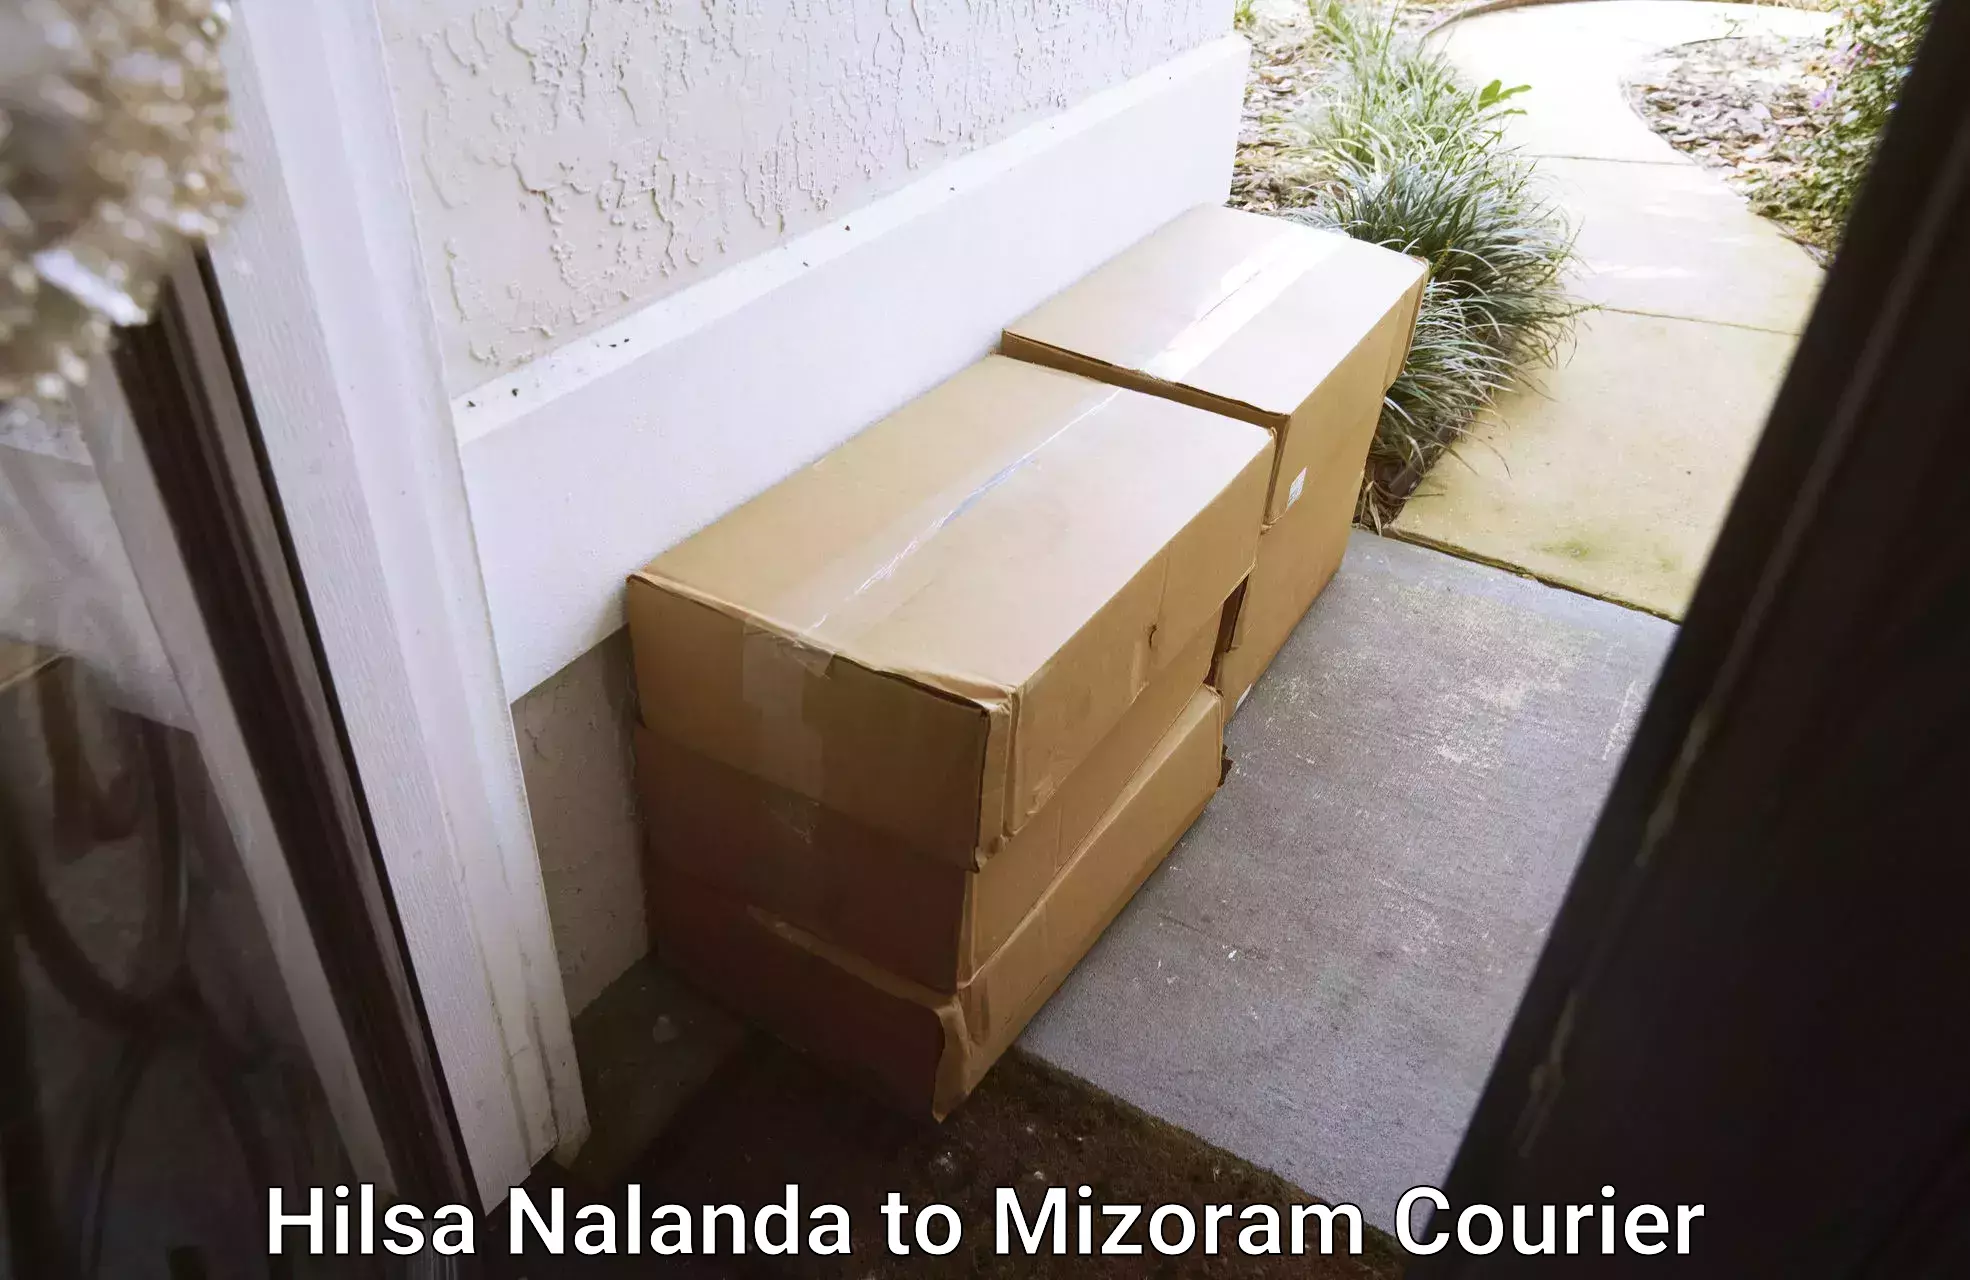 Efficient moving company Hilsa Nalanda to Aizawl